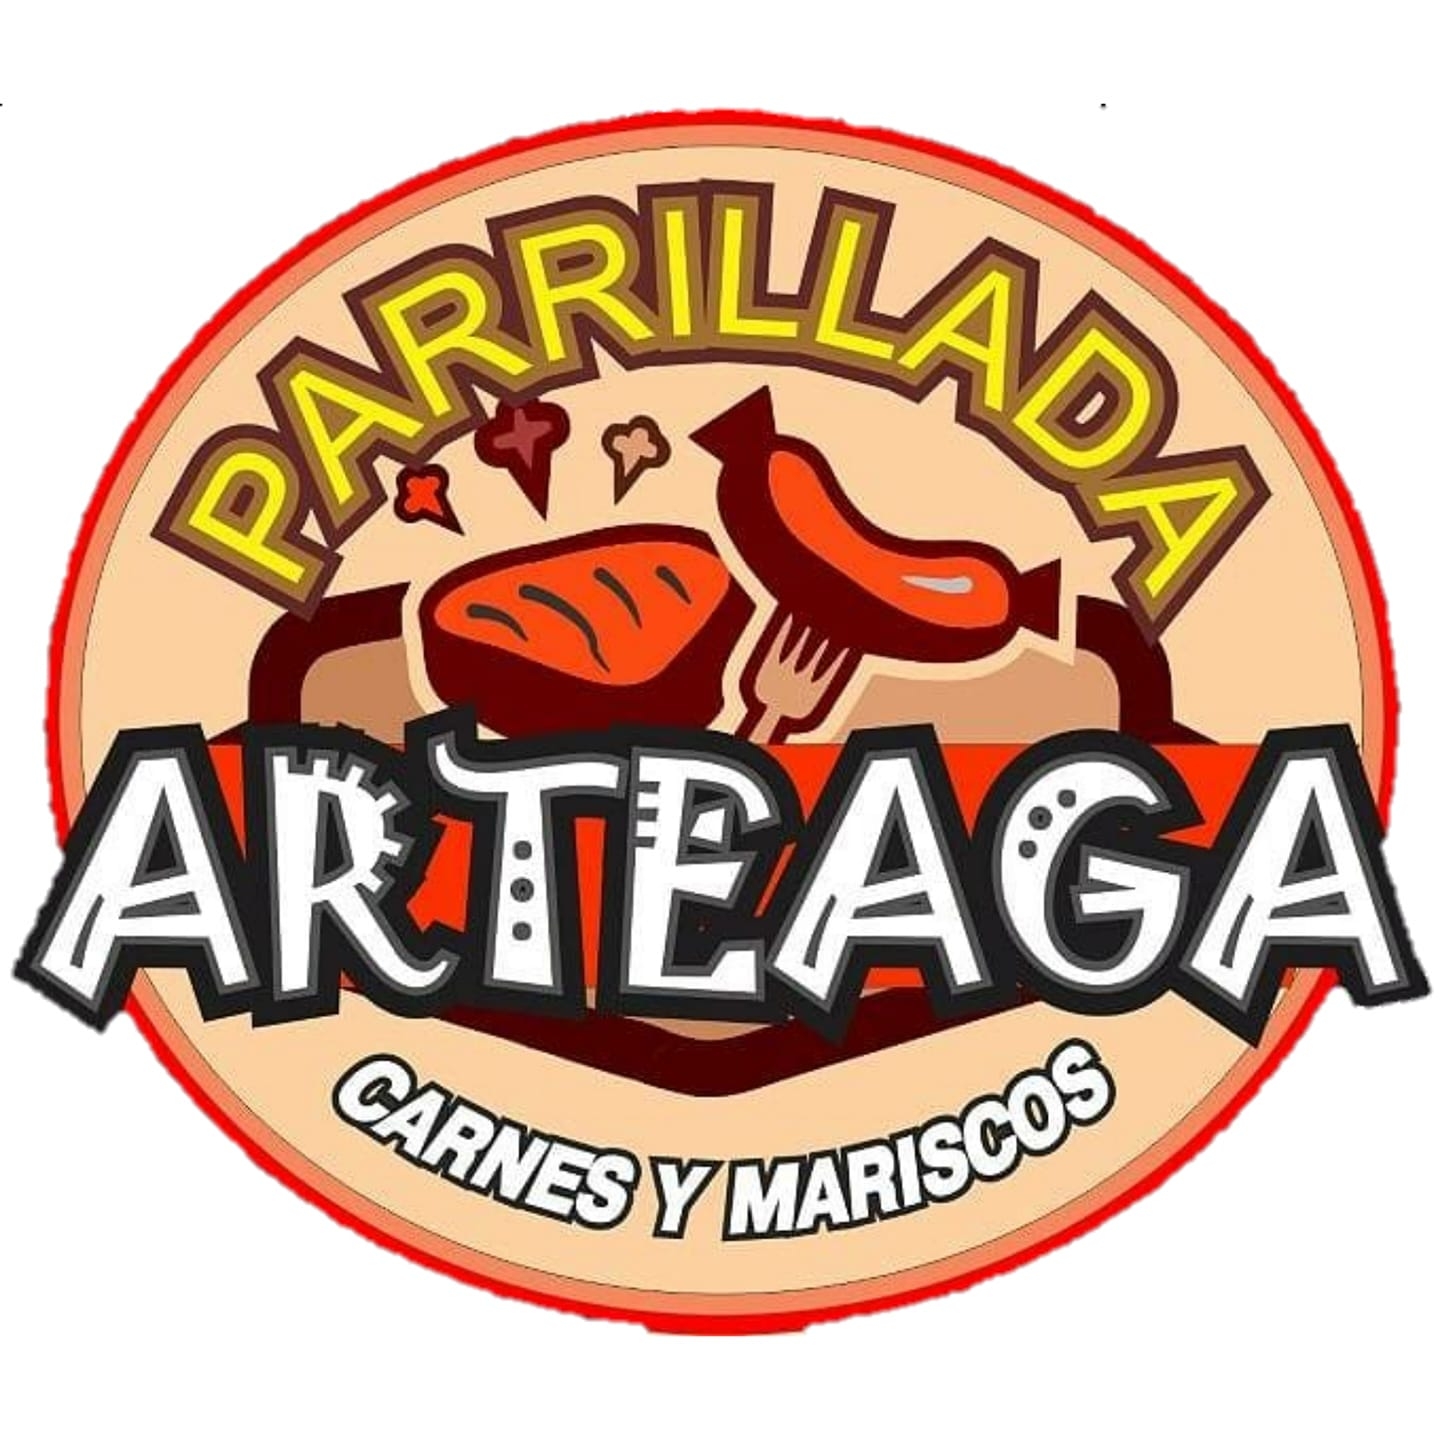 Restaurantes-parrillada-arteaga-centro-17186